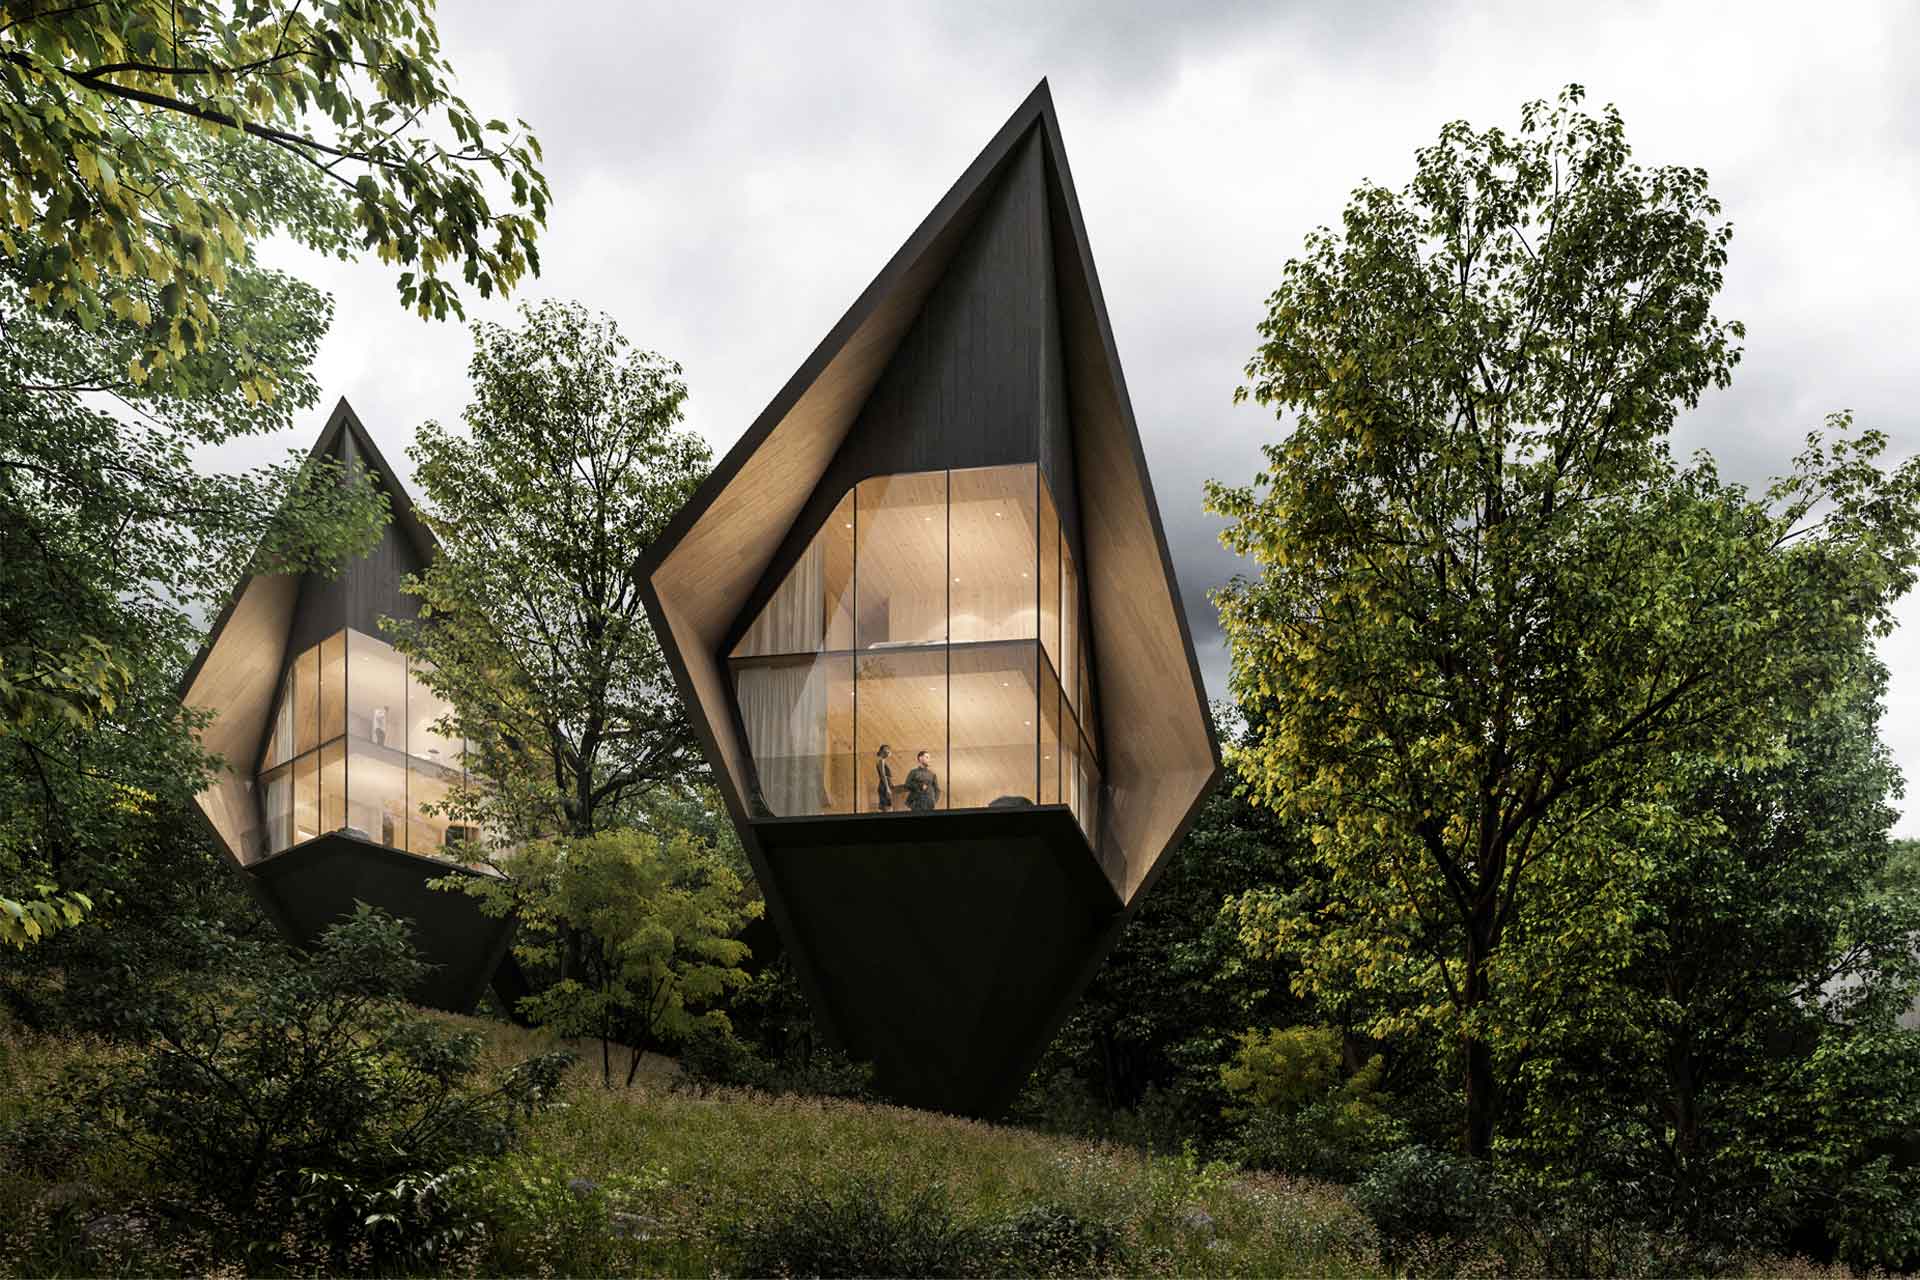 Peter Pichler Architecture reveals West Virginia Tree Houses concept